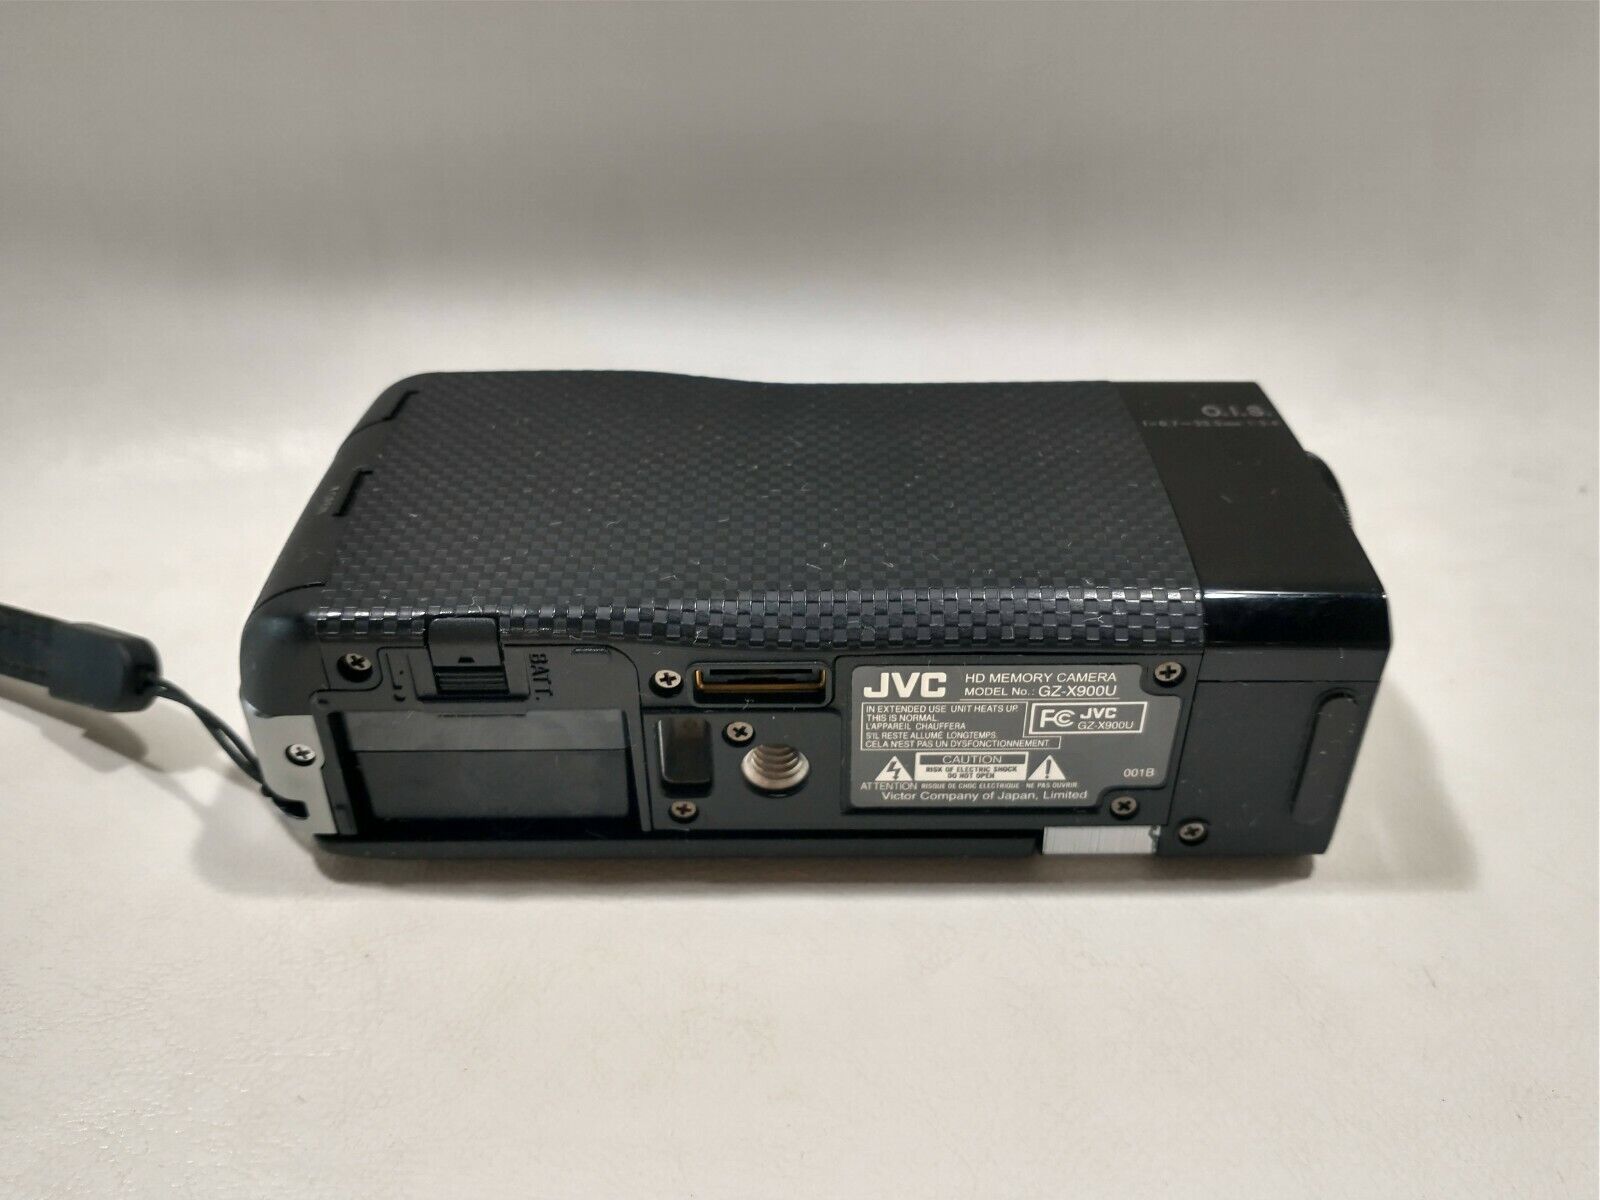 JVC Everio GZ-X900 - camcorder - Konica Minolta - storage flash 